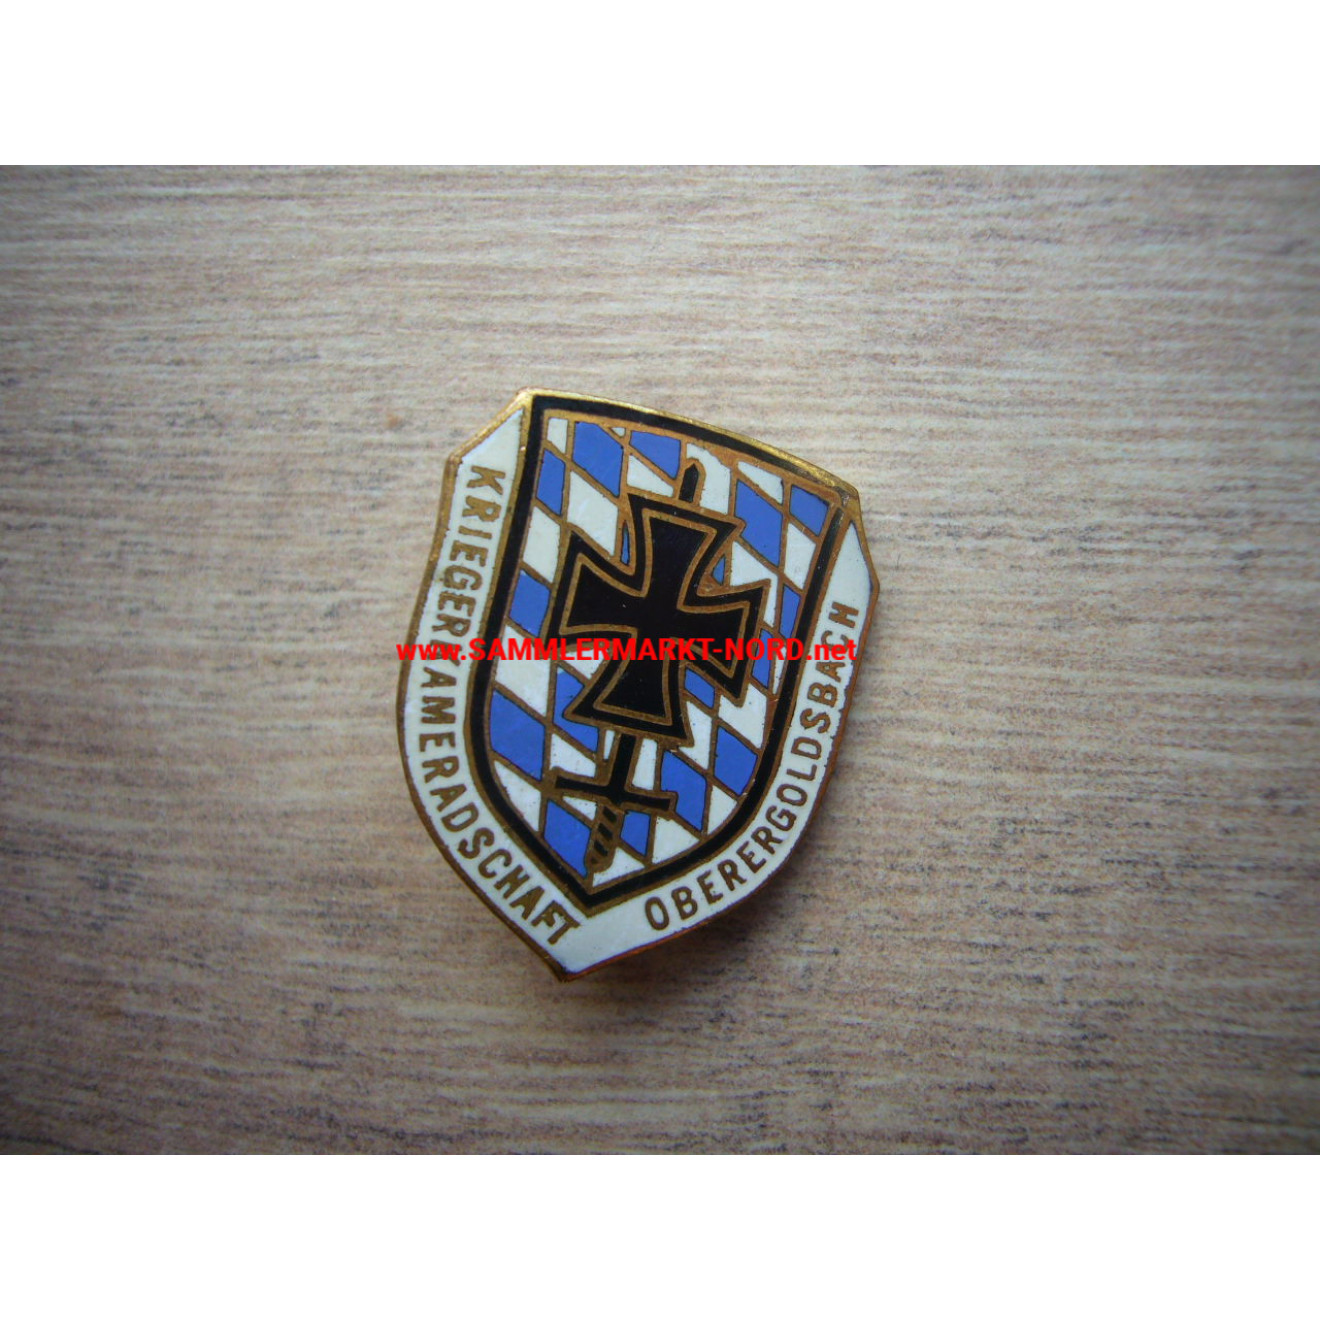 Warrior Comradeship Oberergoldsbach - Member Badge